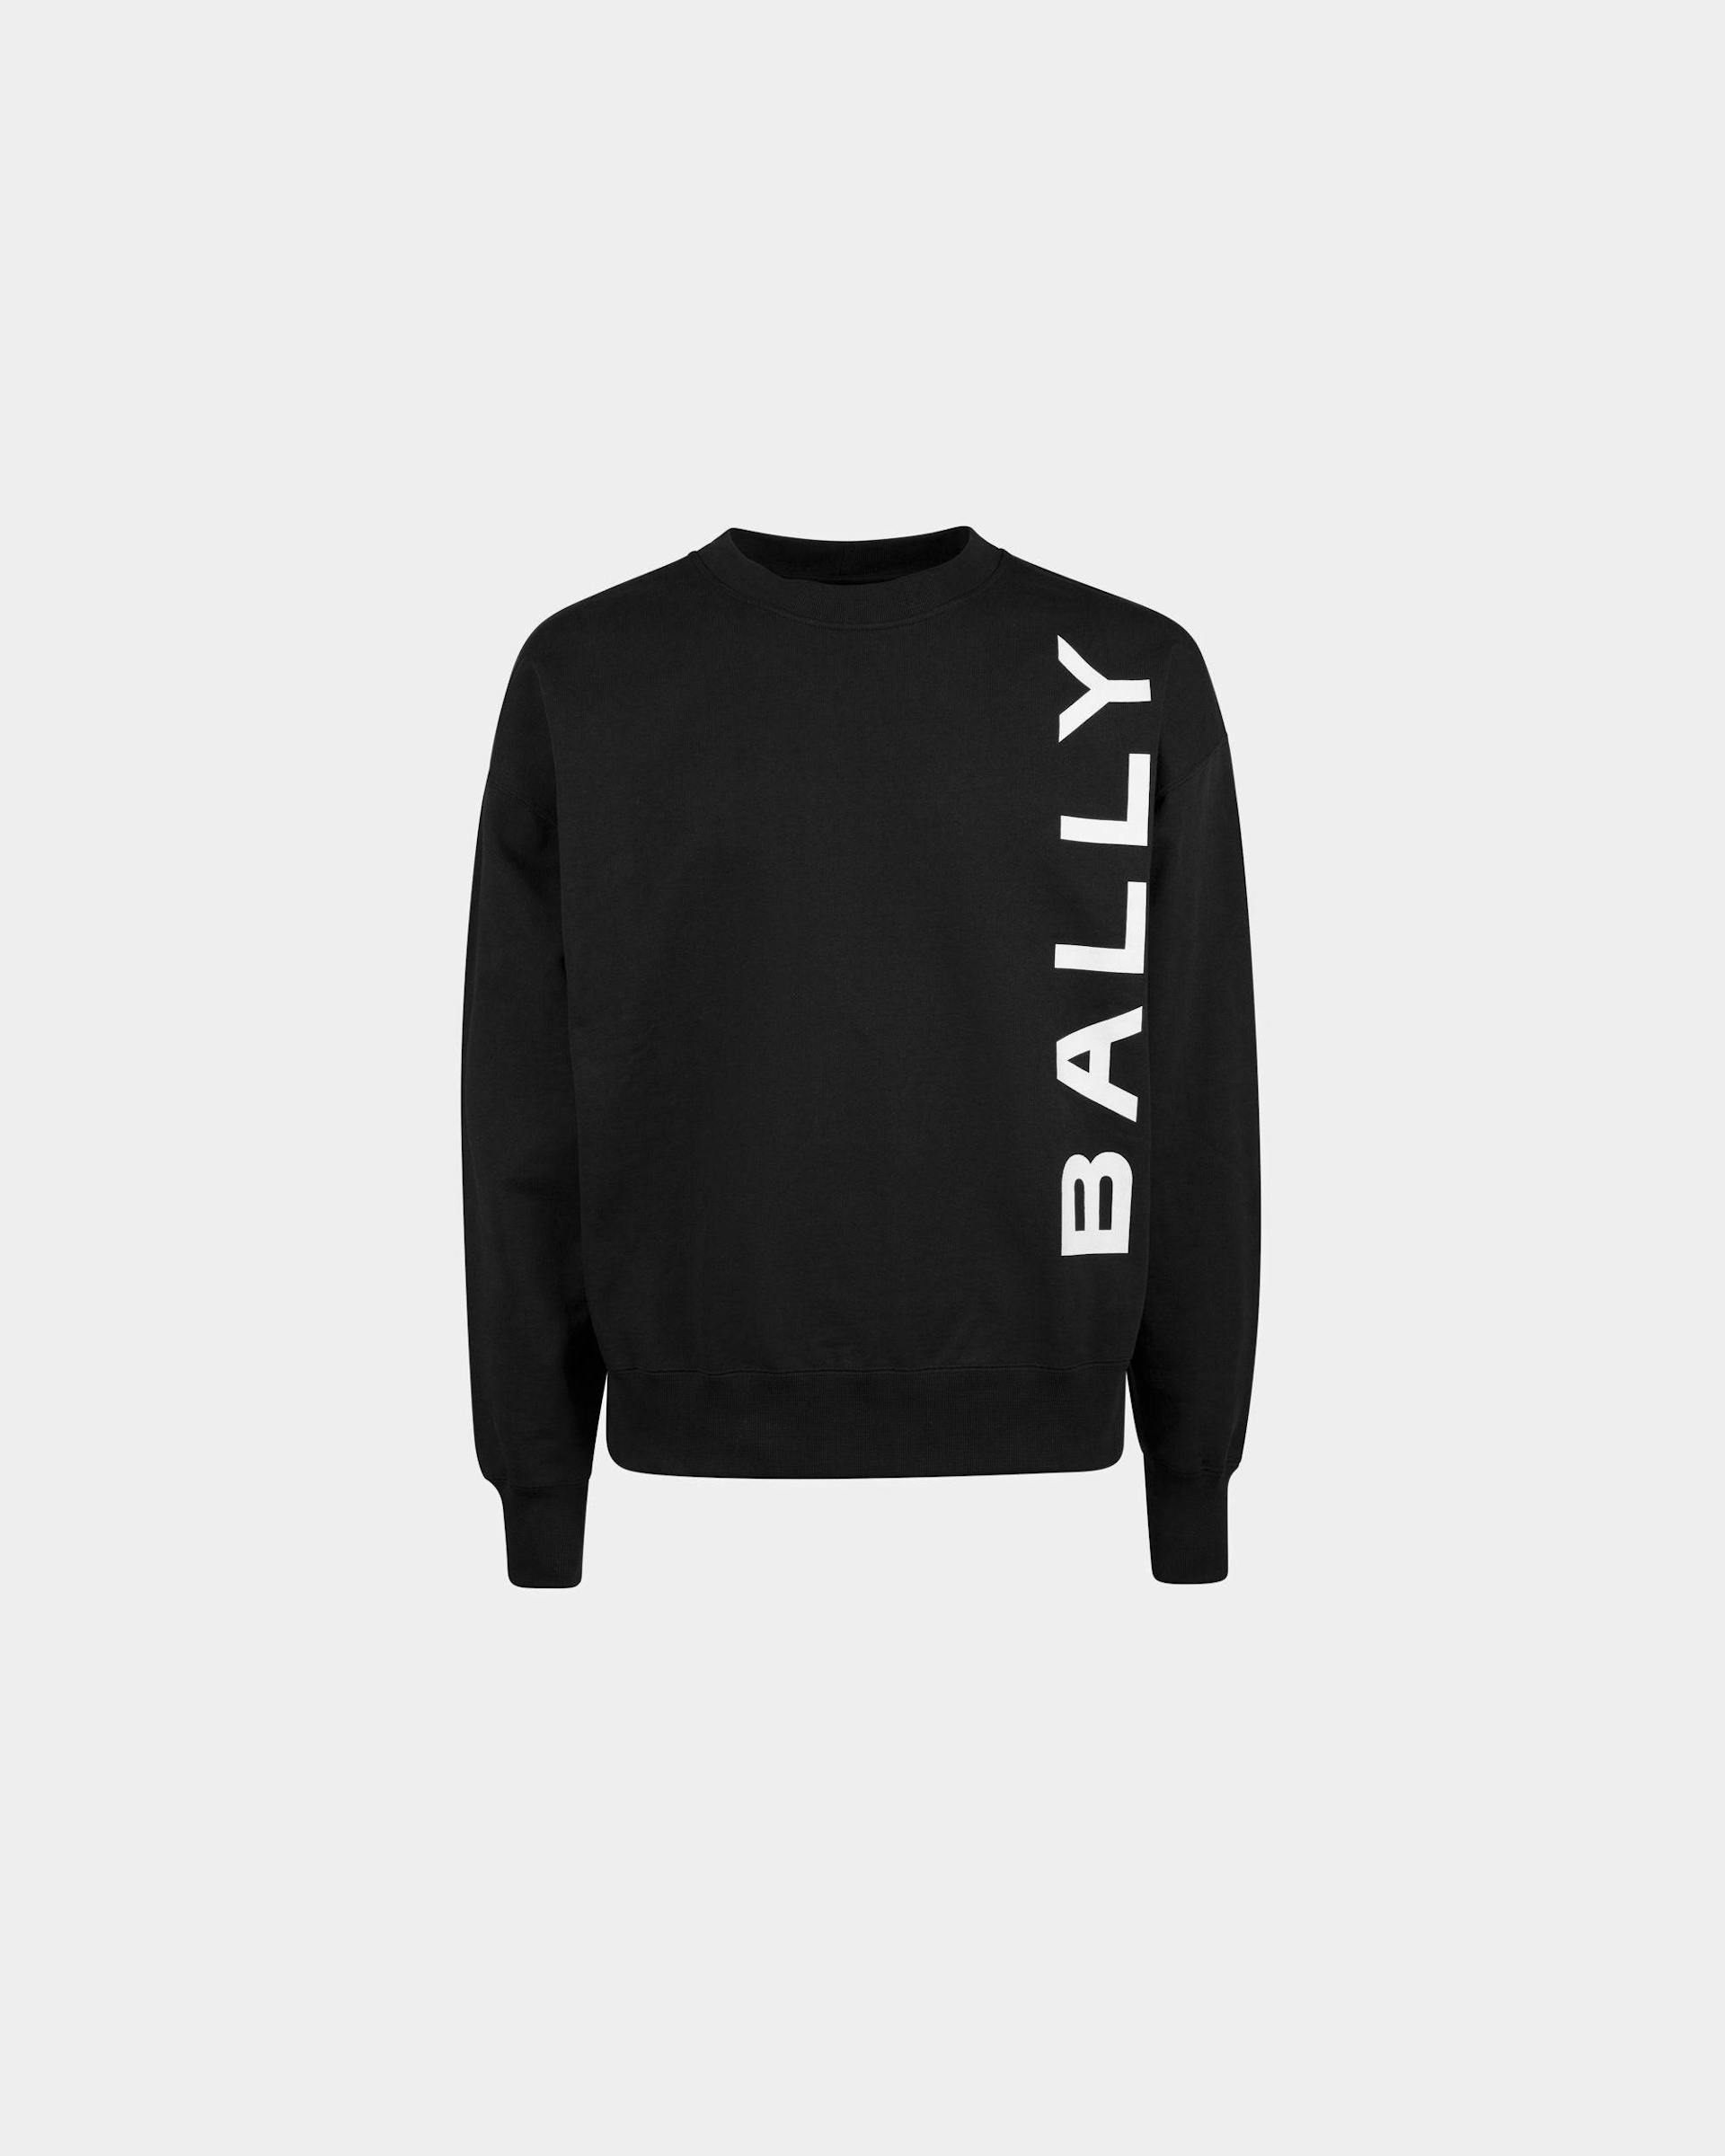 Men's Sweatshirt in Black Cotton | Bally | Still Life Front